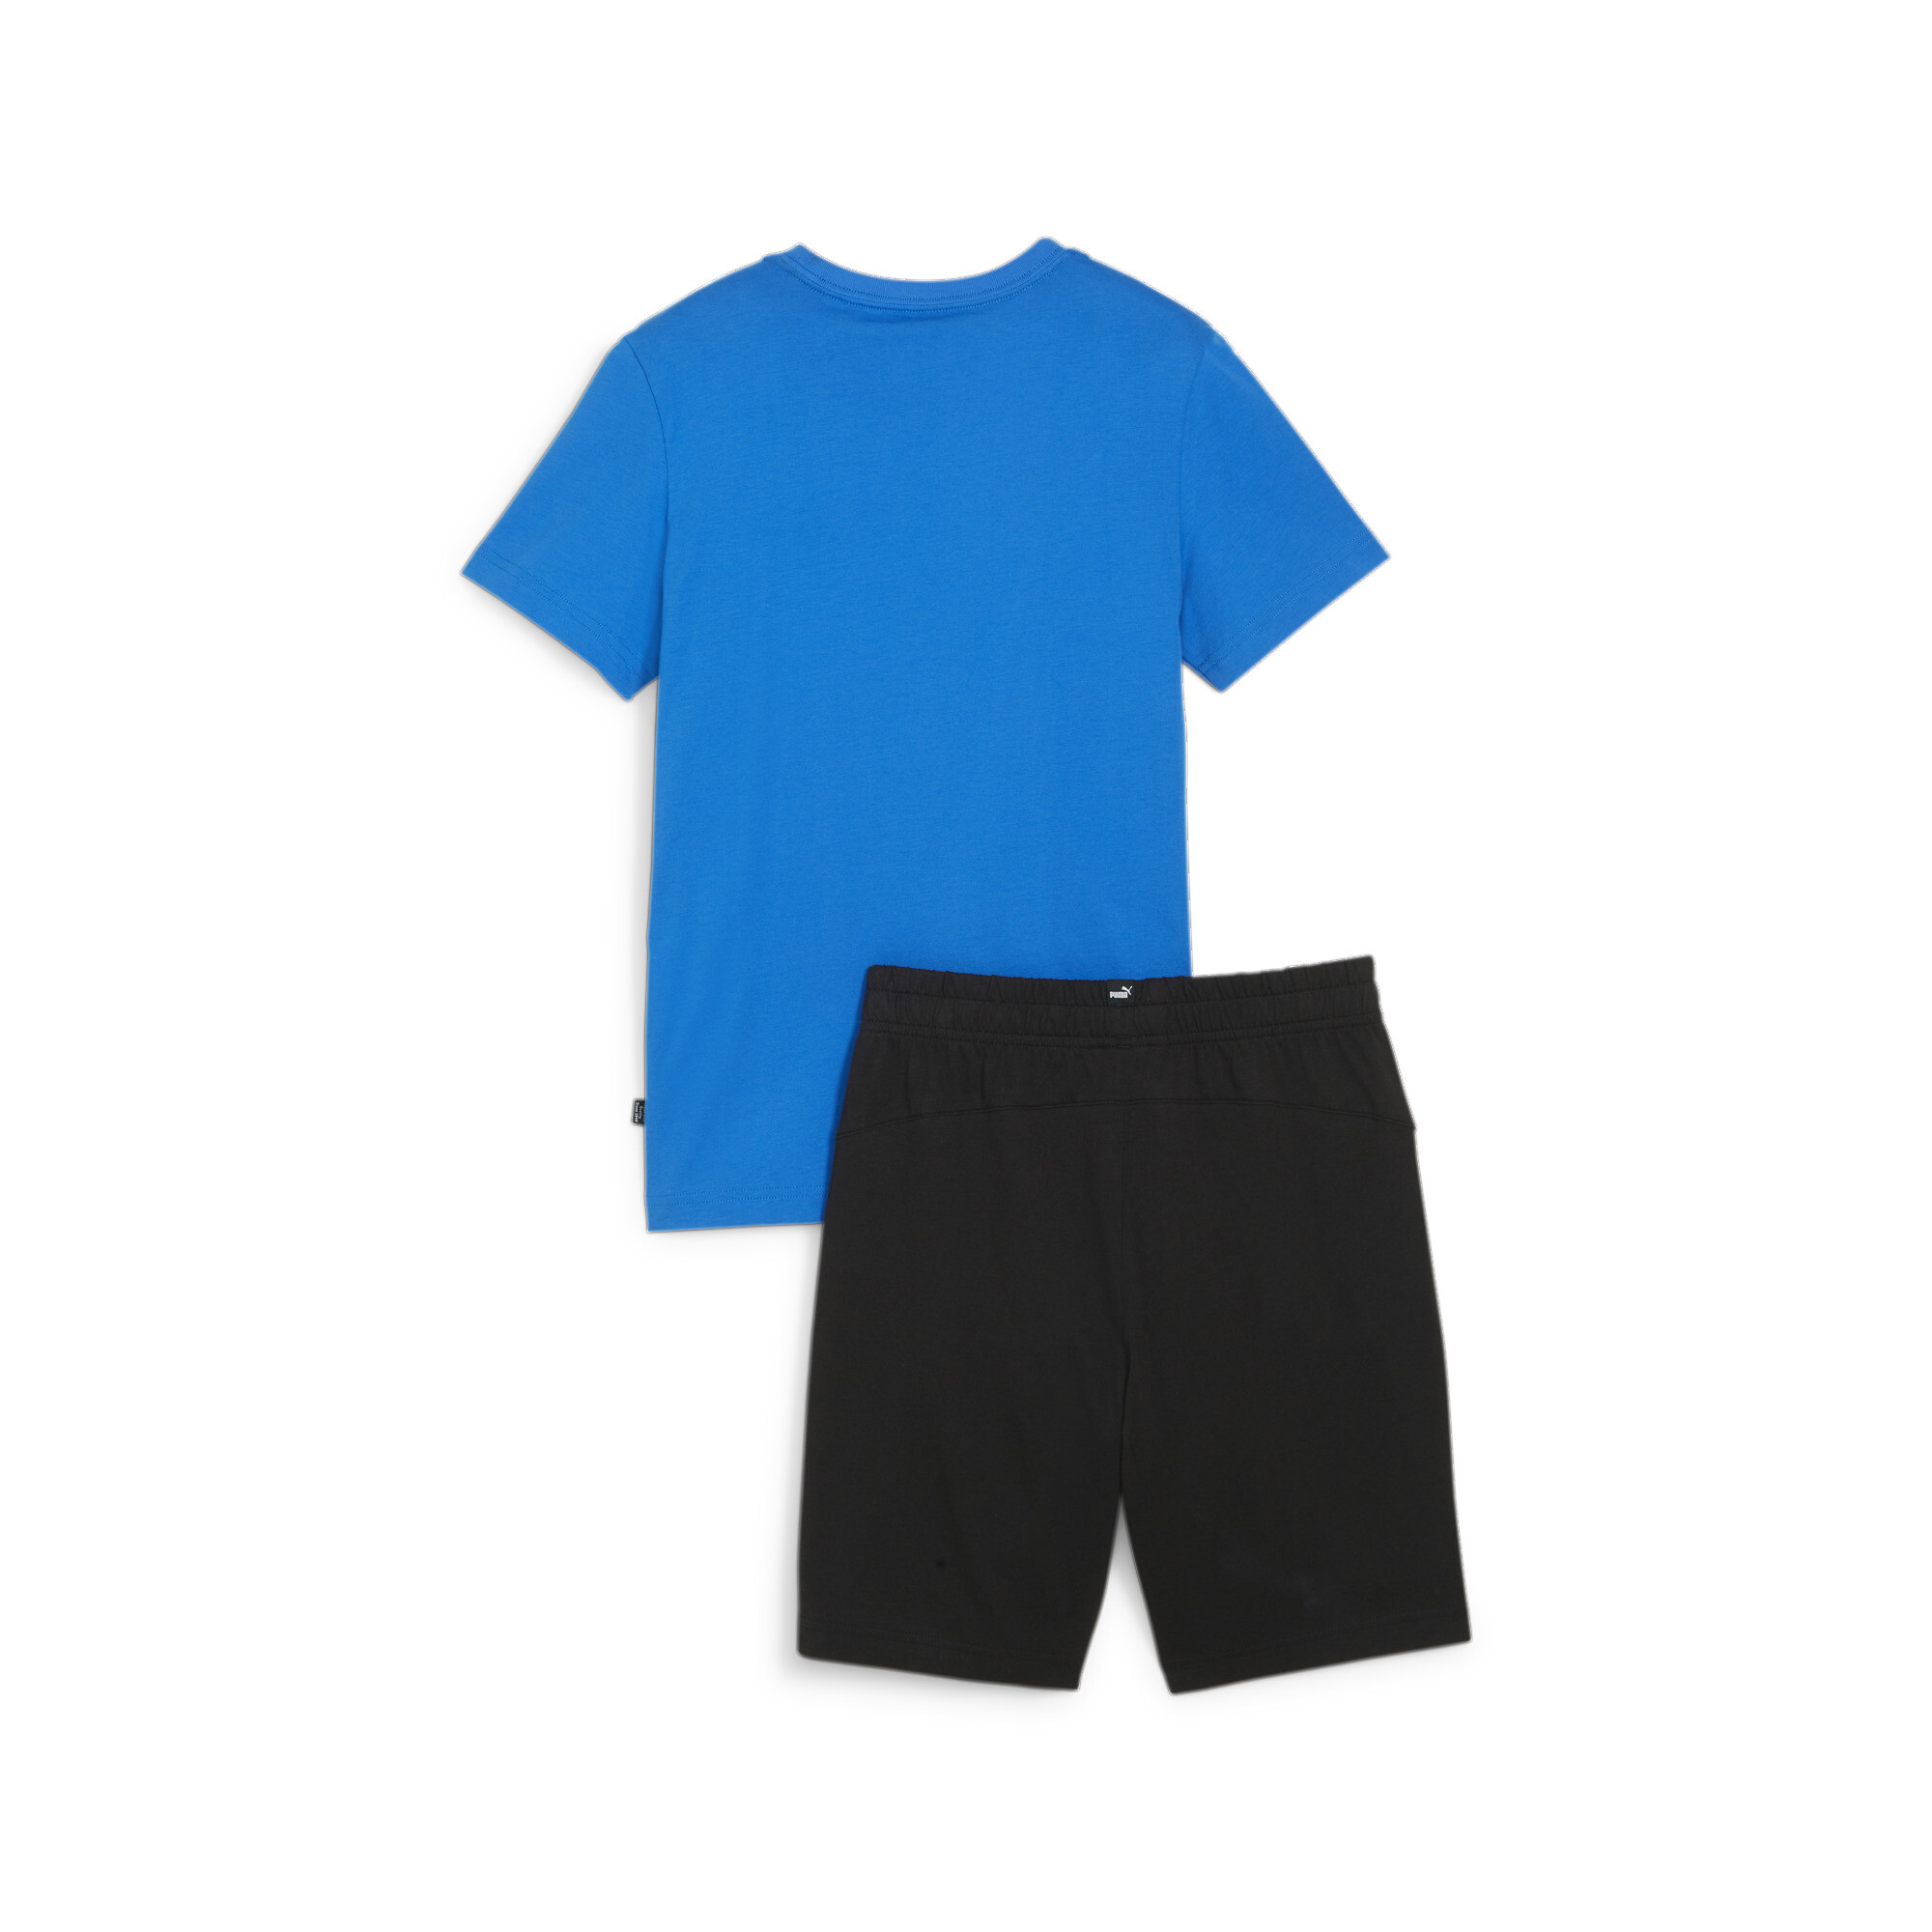 Men's Puma Jersey Youth Shorts Set, Blue, Size 9-10Y, Clothing